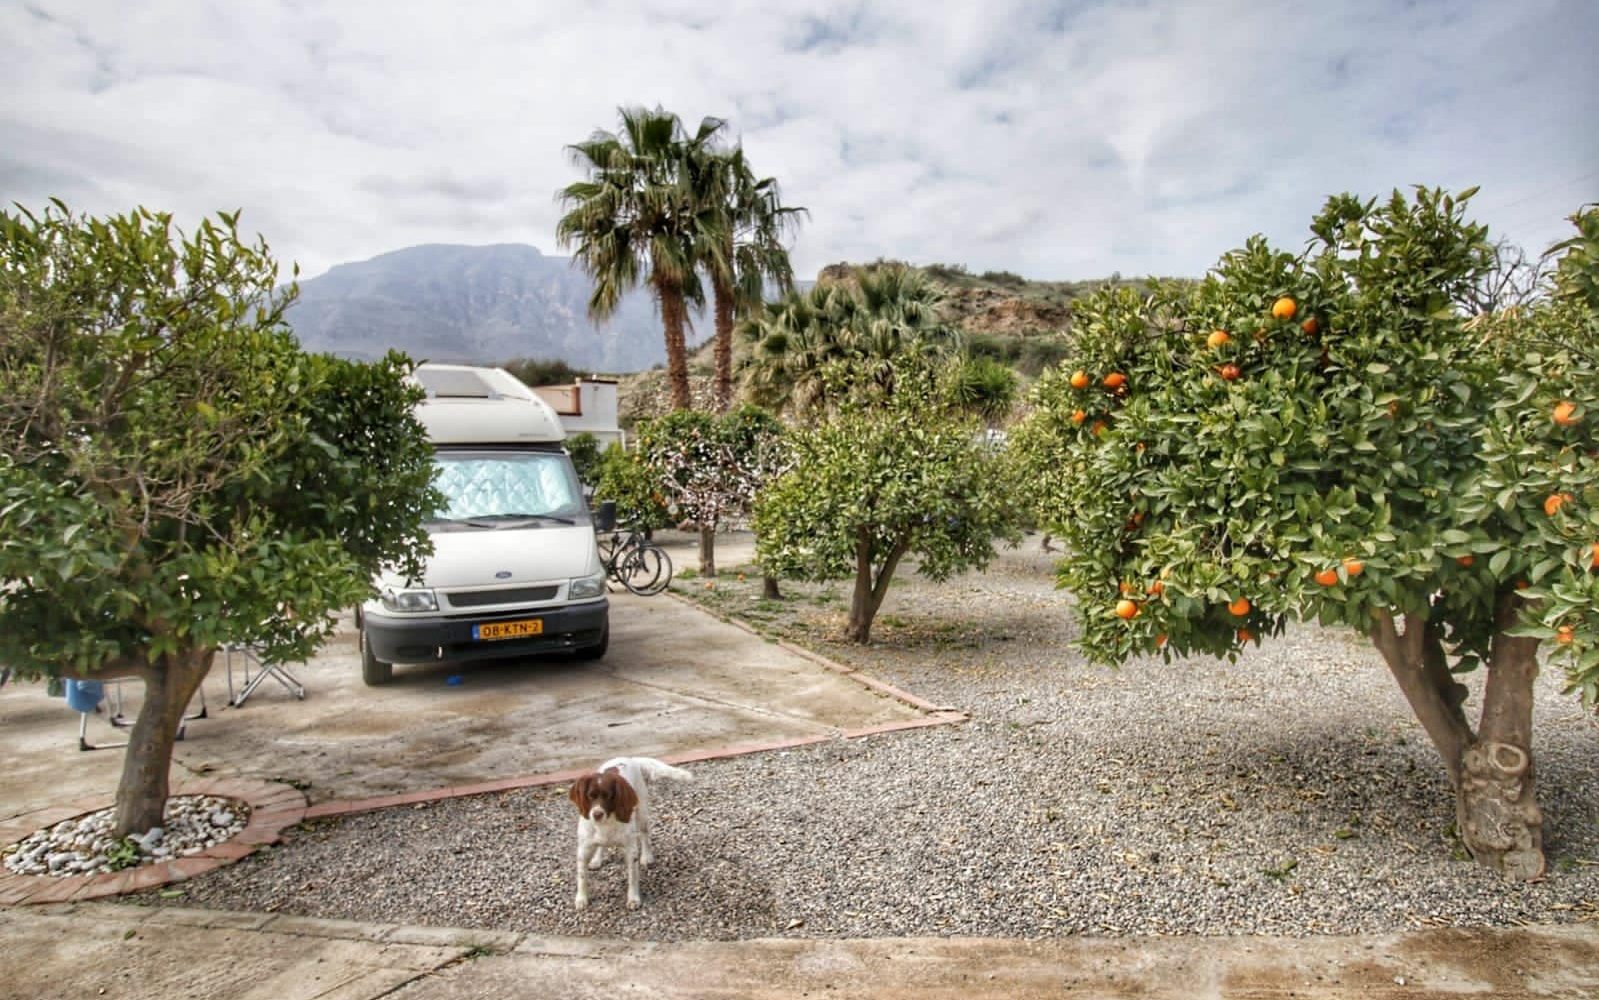 Under coronakrisen med autocamperen på en appelsinfarm i Spanien